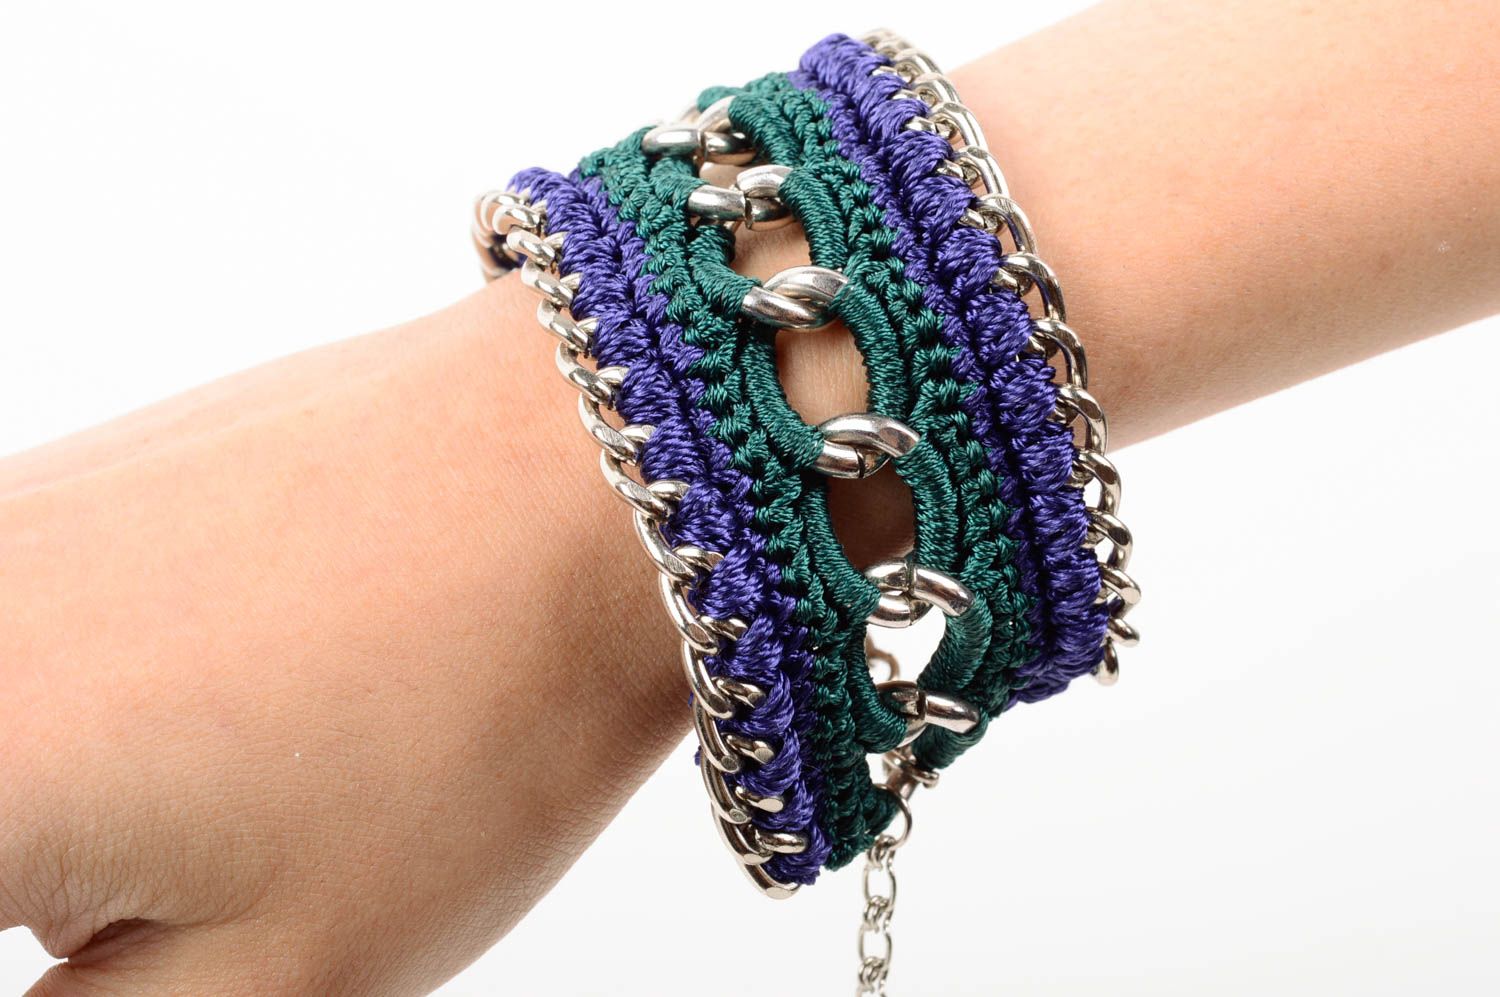 Handmade bracelet chain bracelet fashion jewelry designer accessories gift ideas photo 2